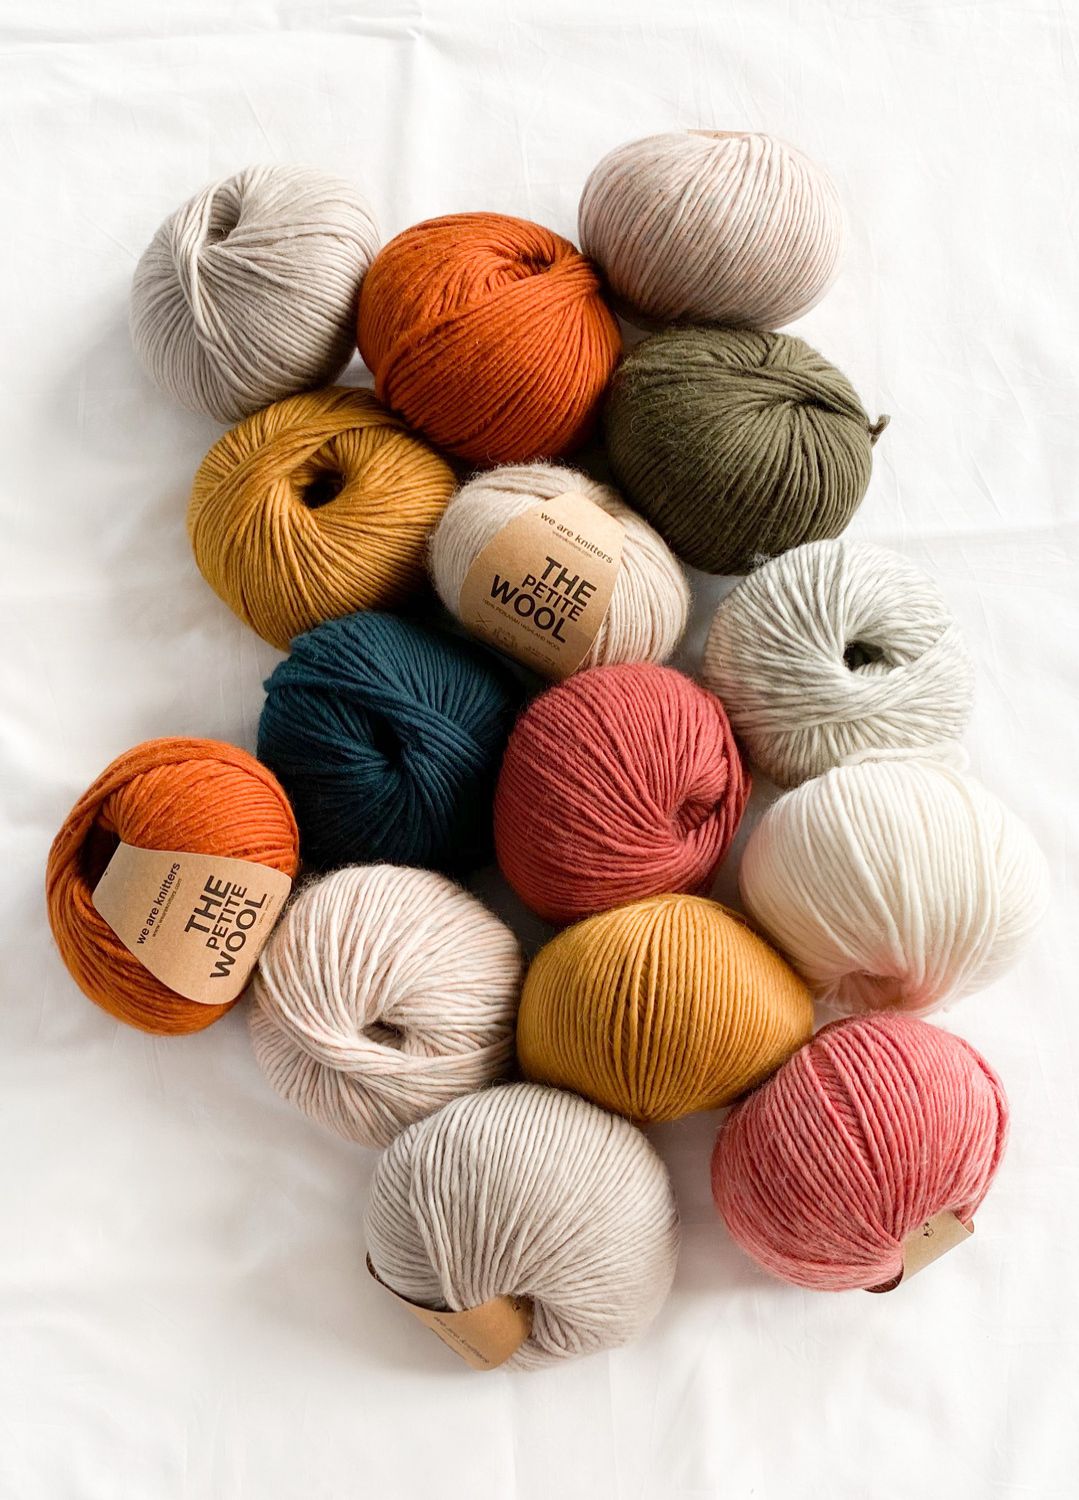 15 Pack of Petite Wool Yarn Balls